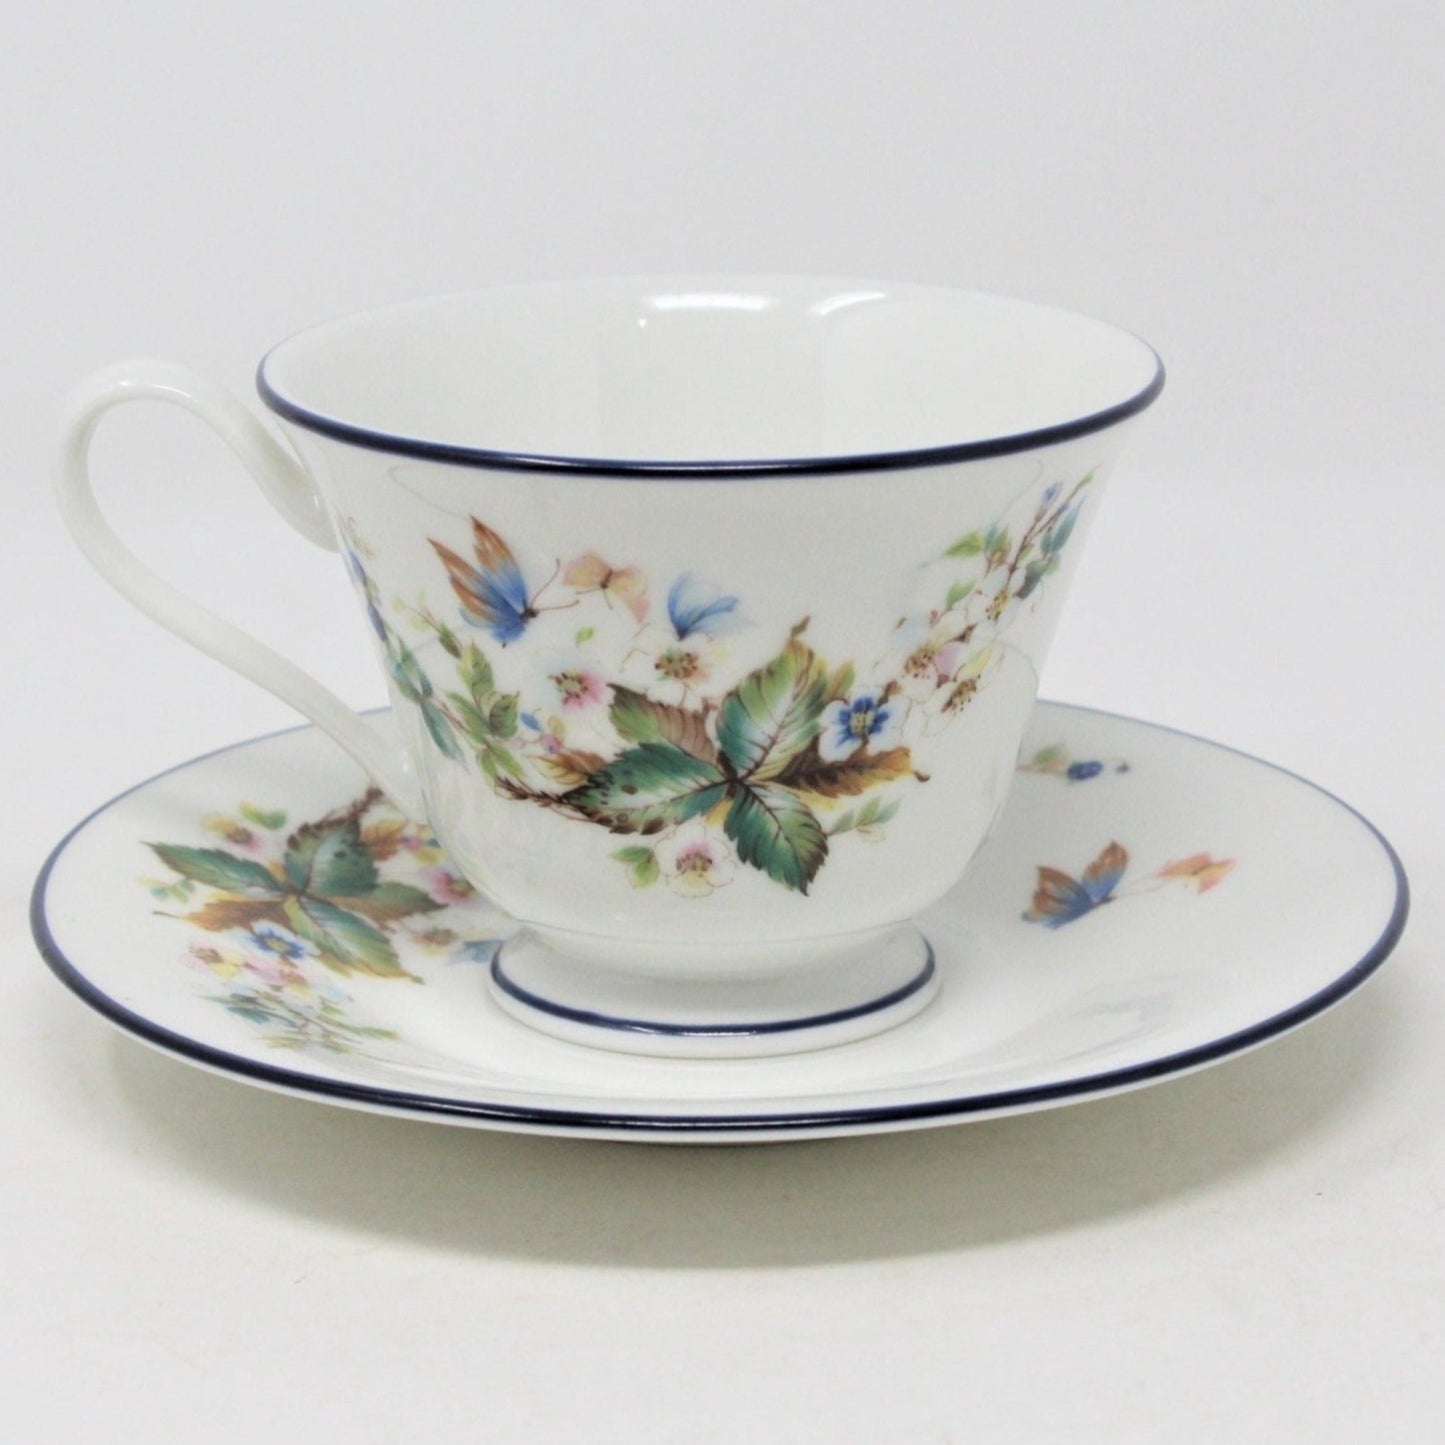 Teacup and Saucer, Lenox / Oxford, Brandywine, Bone China, Vintage